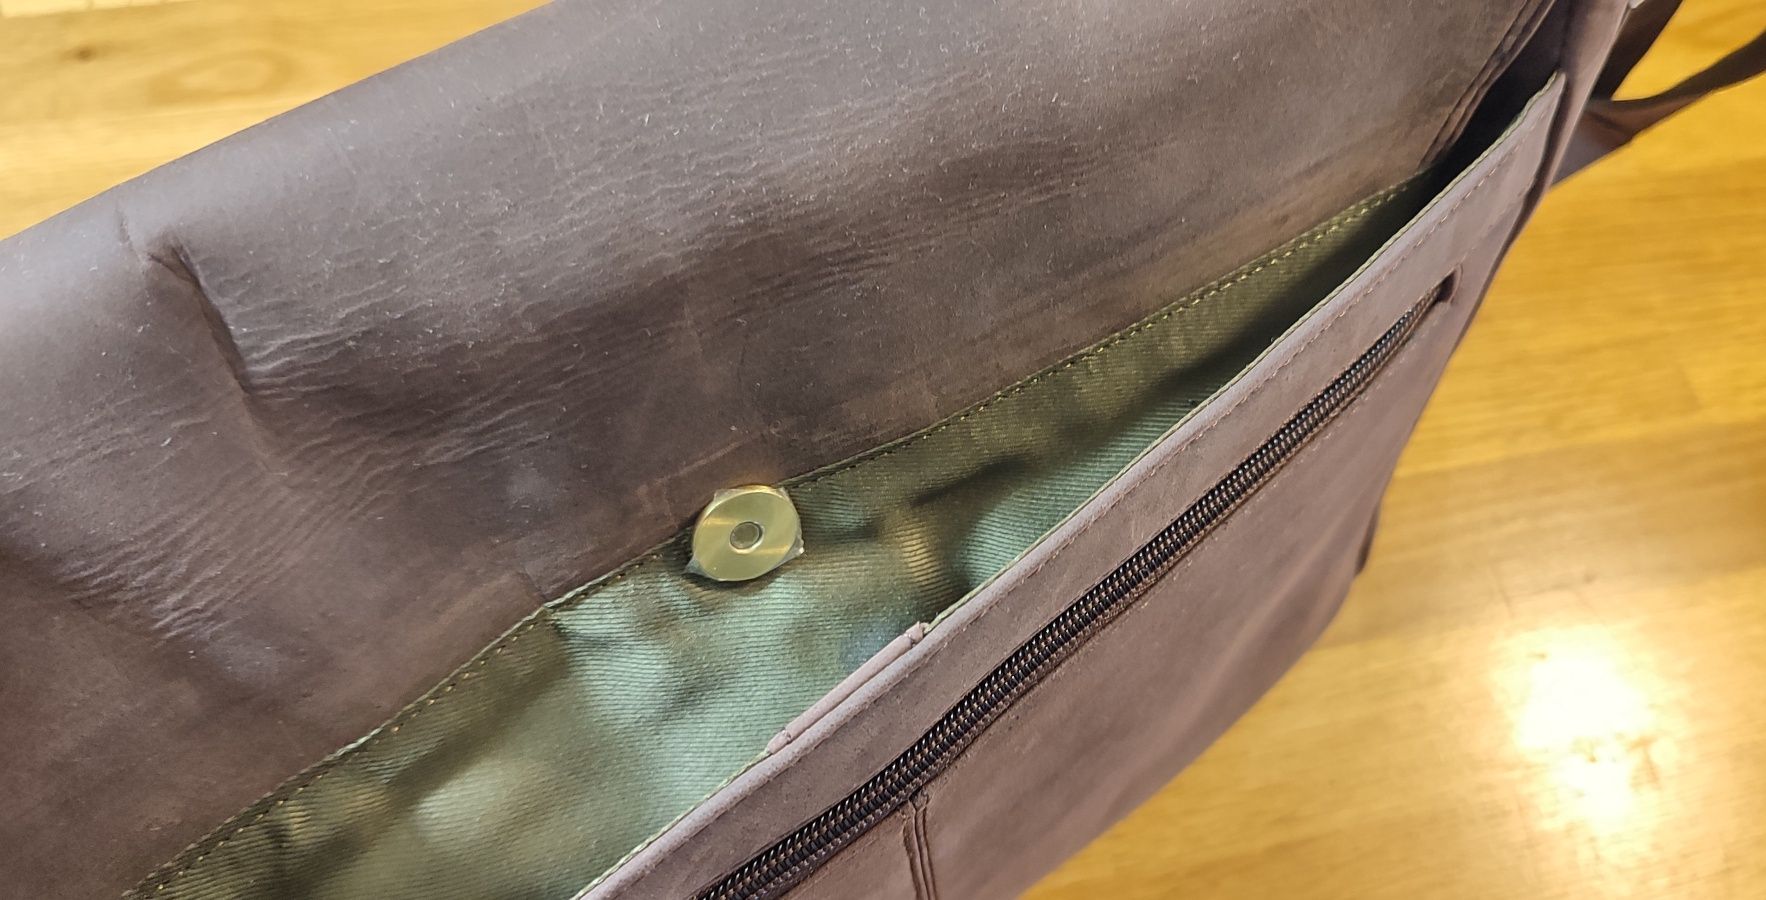 Geanta barbati Leabags din piele naturala, geanta laptop model vintage